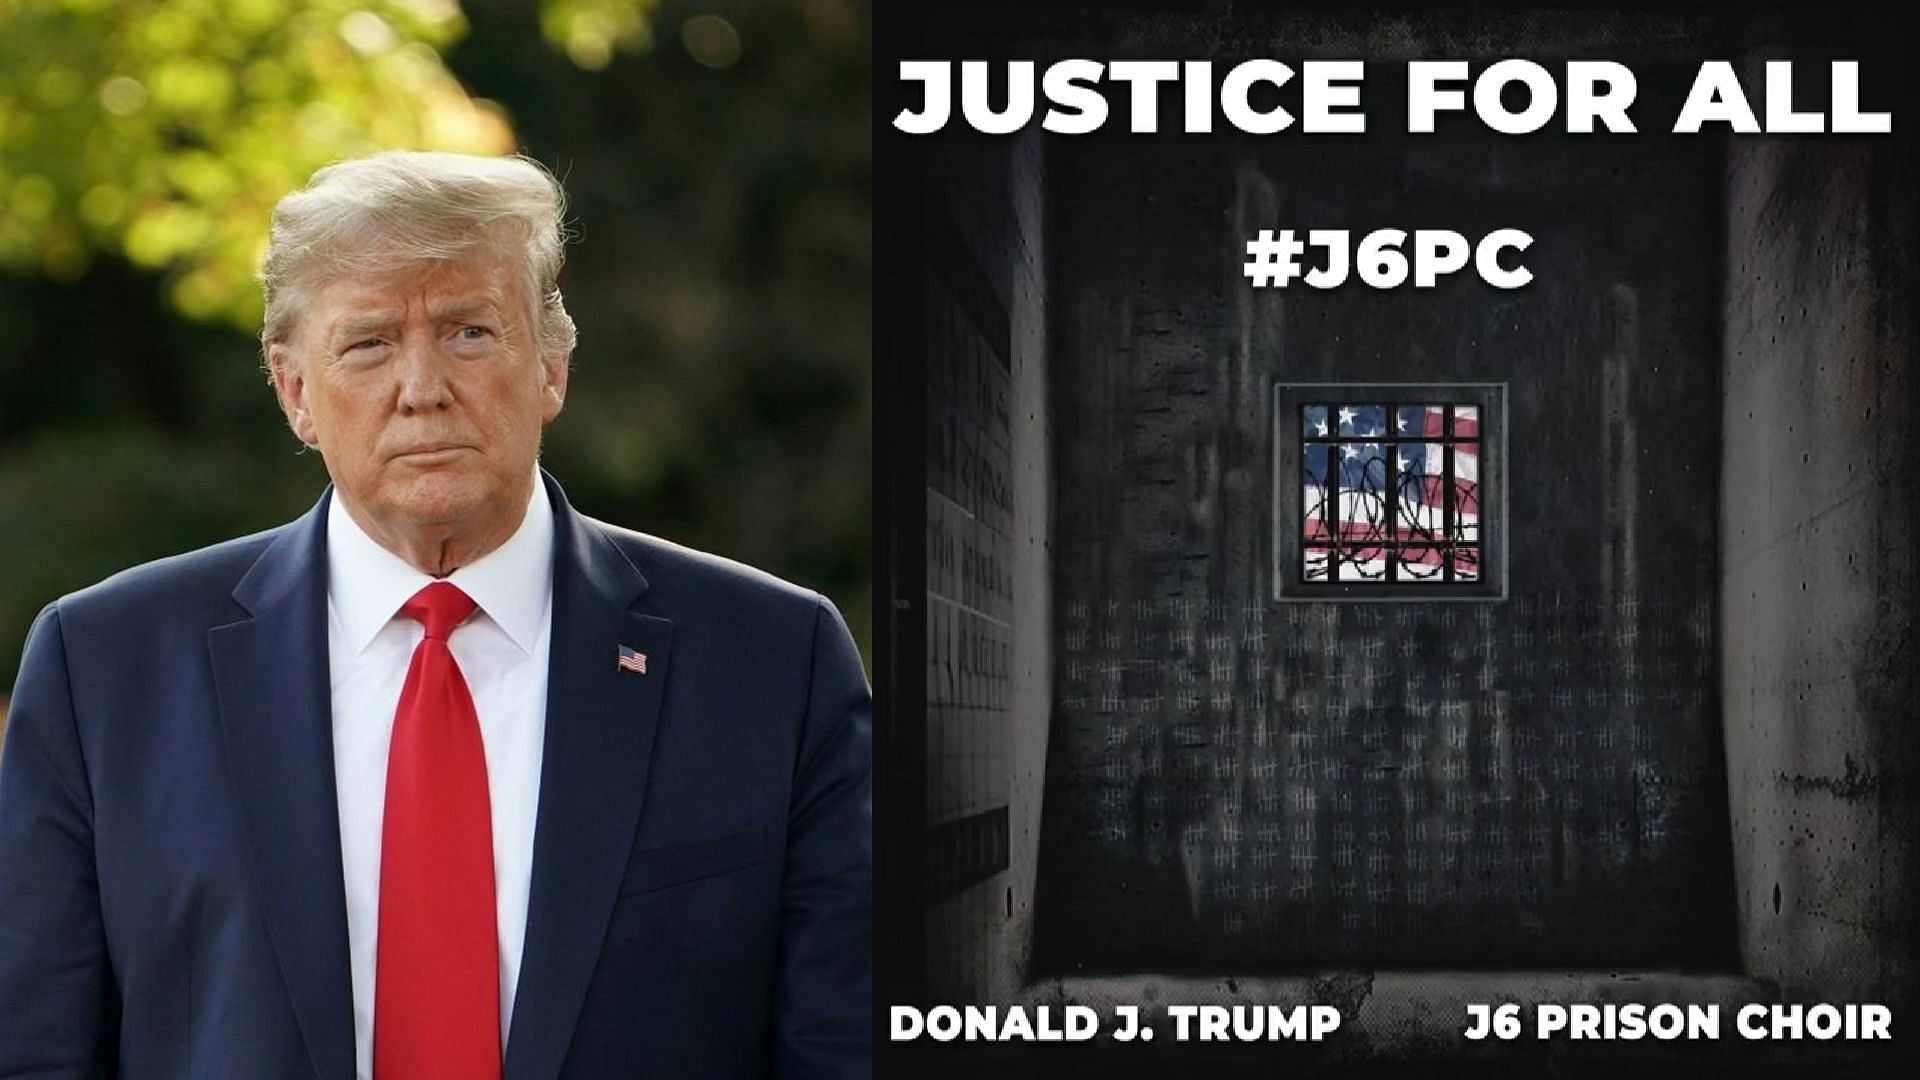 Trumps song with J6 Prison Choir sparks memefest online (Image via Getty Images, Twitter/@DM3710Liberty)